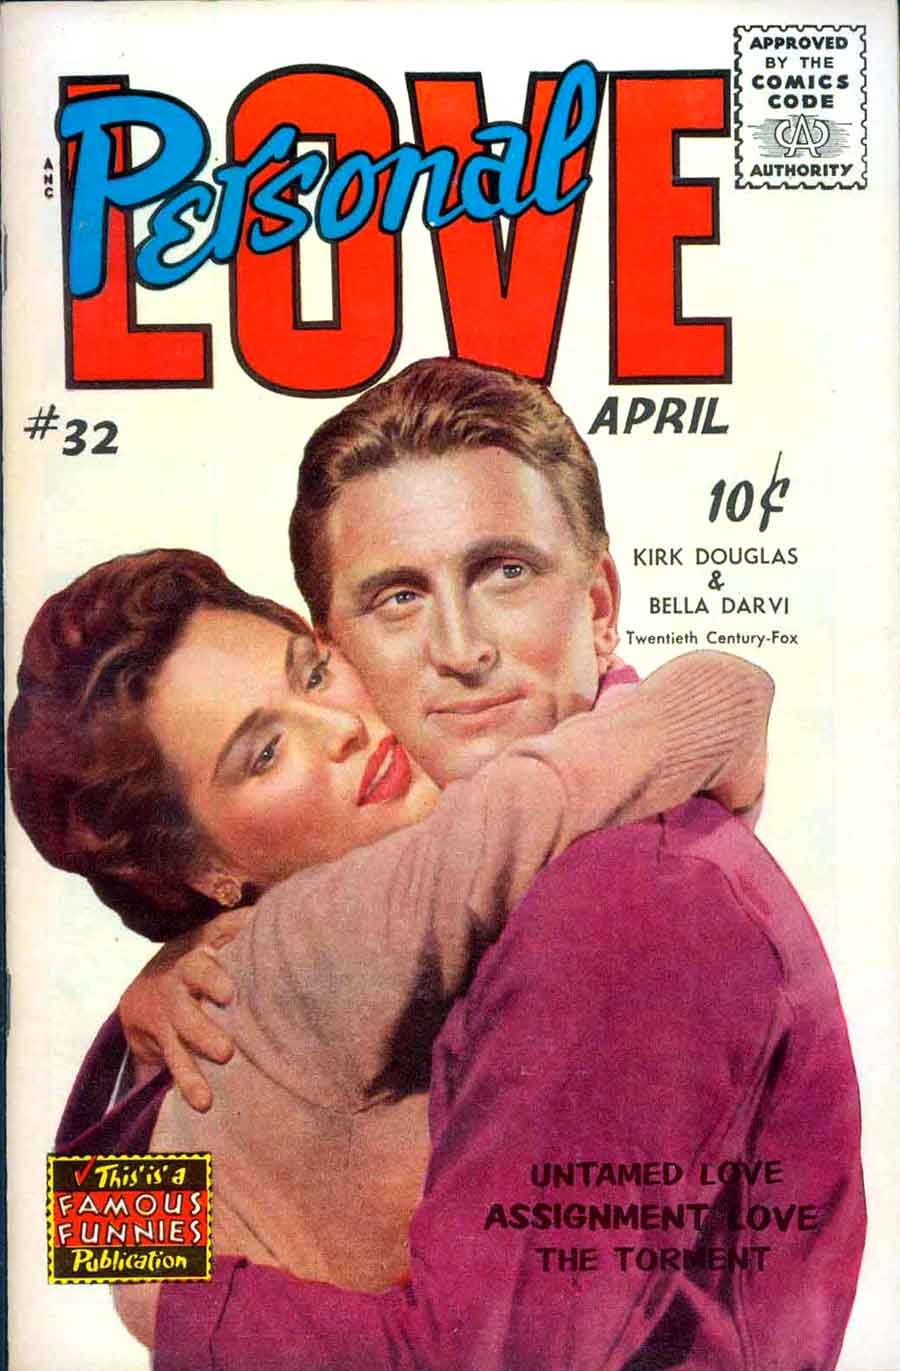 Personal Love v1 #32 Kirk Douglas romance comic book photo cover